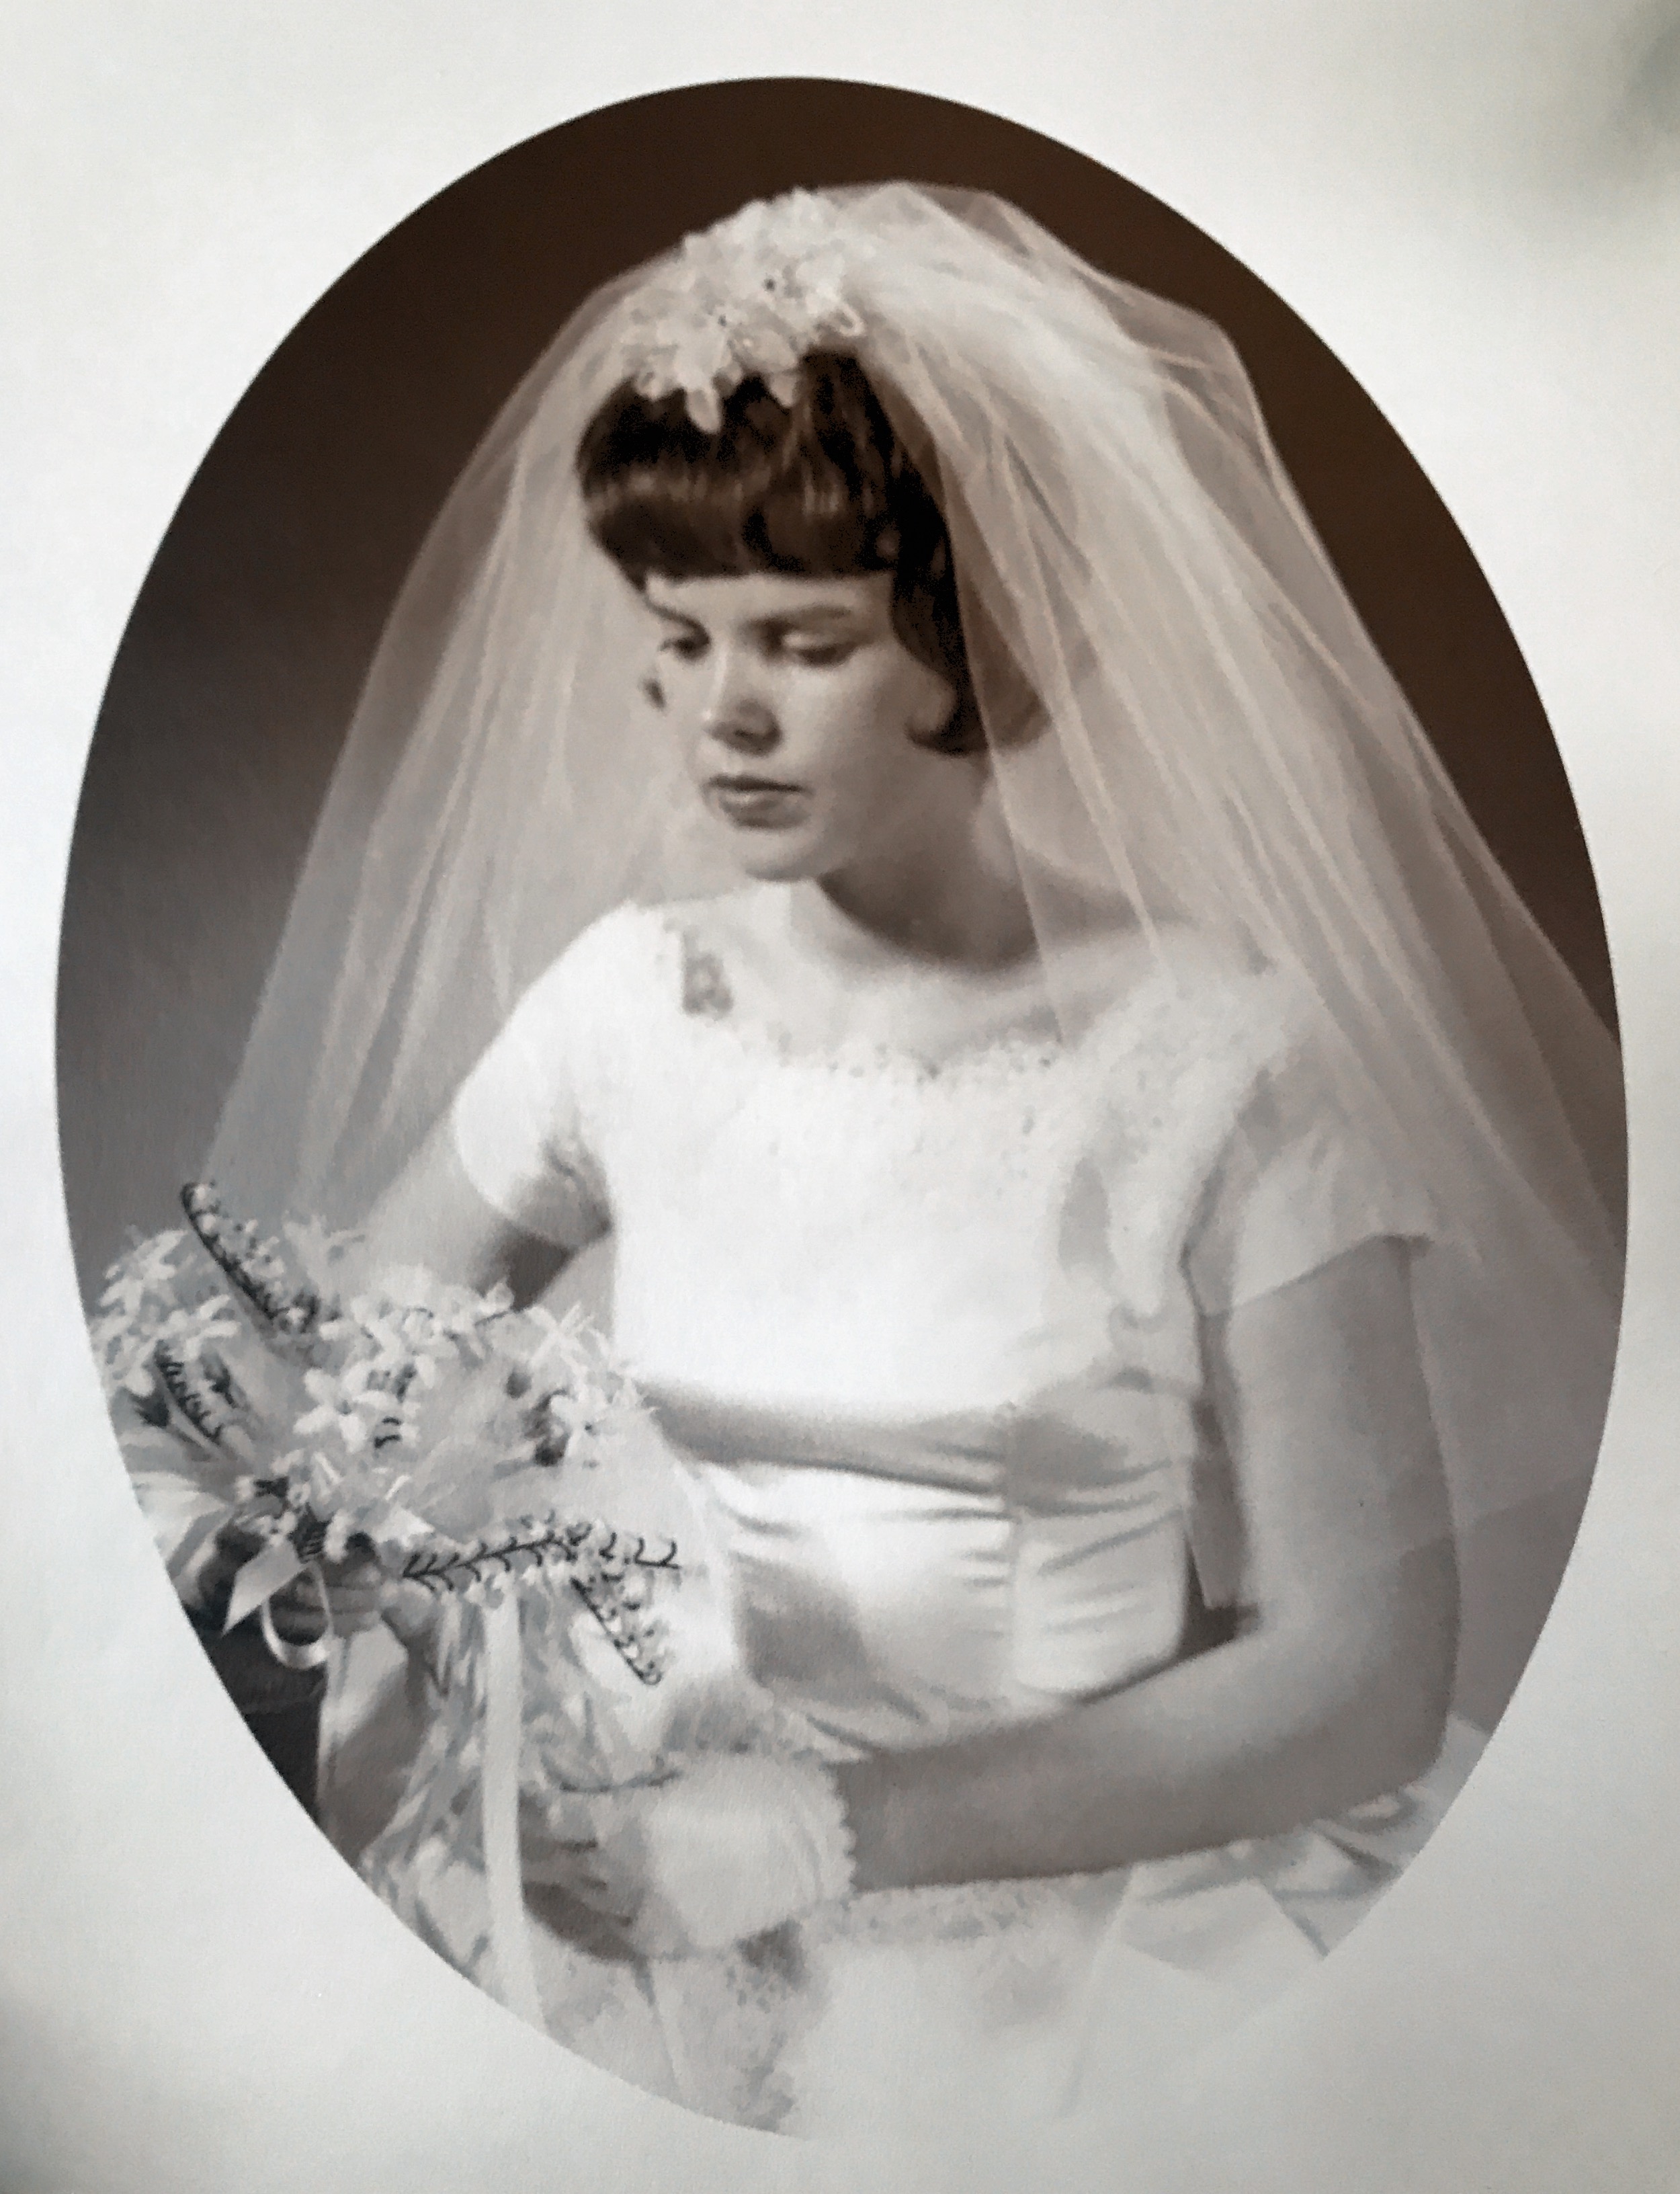 Pat White June 1, 1963 married to Charles Henry White Jr.